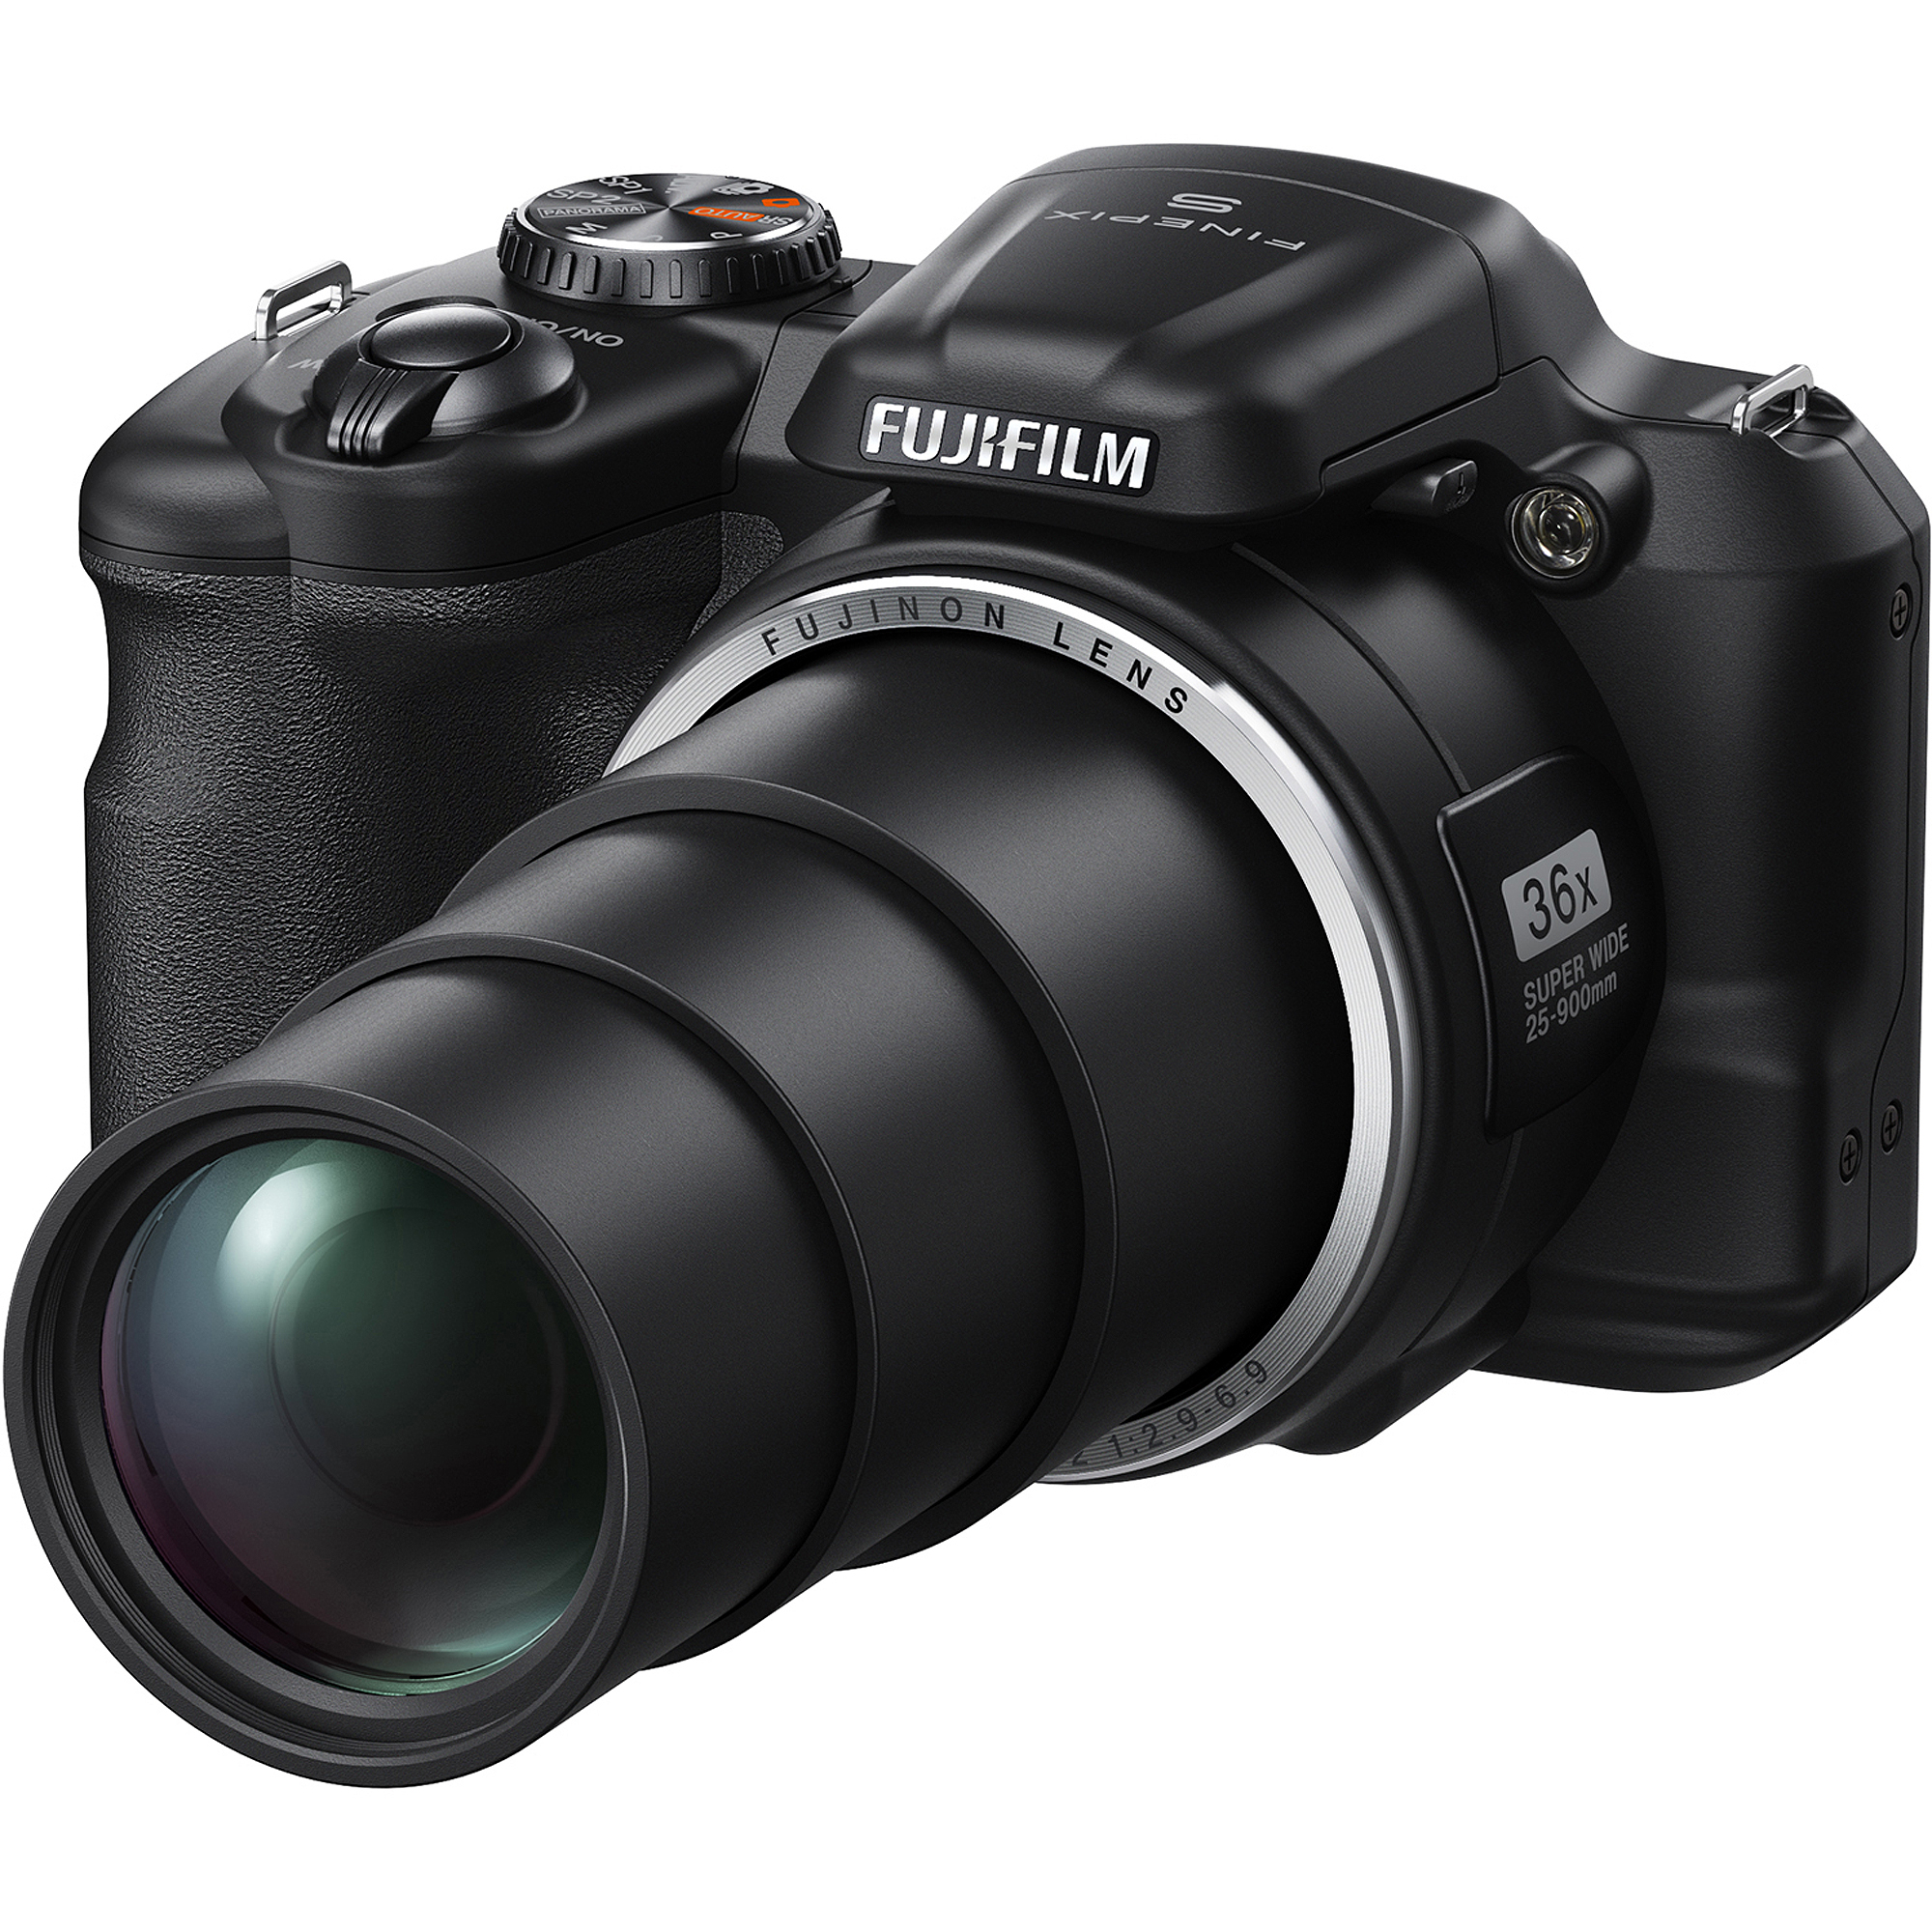 FUJIFILM Black FinePix S8630 16 MP 36x Optical Zoom Digital Camera, Bonus Case Included - image 4 of 6